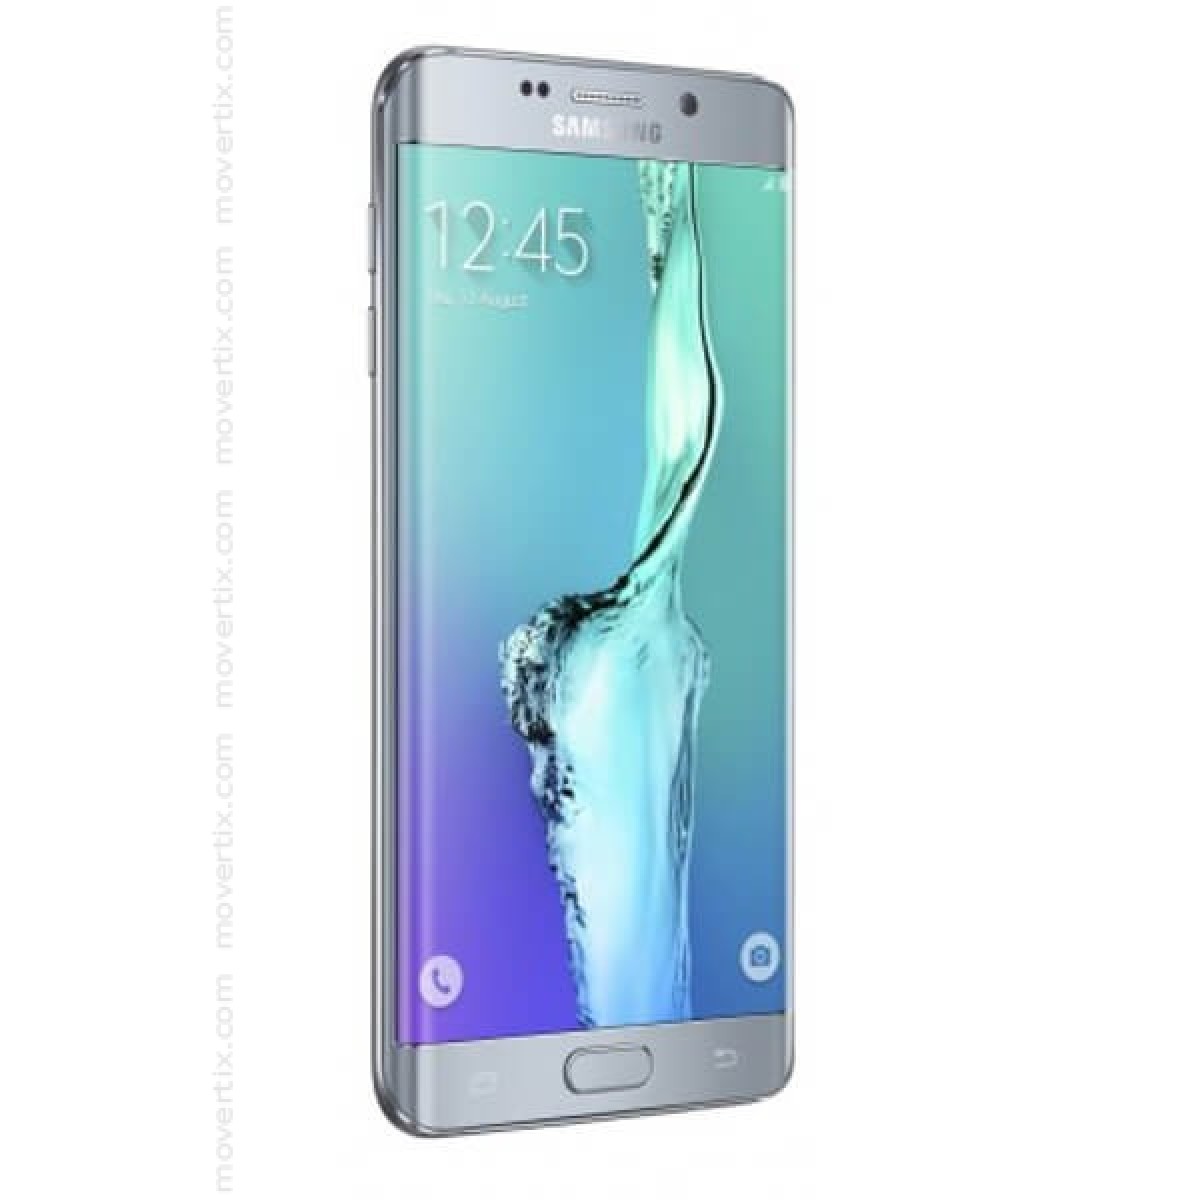 Tegenhanger meditatie magie Samsung Galaxy S6 Edge Plus Silver 32GB - SM-G928F (8806086997409) |  Movertix Mobile Phones Shop